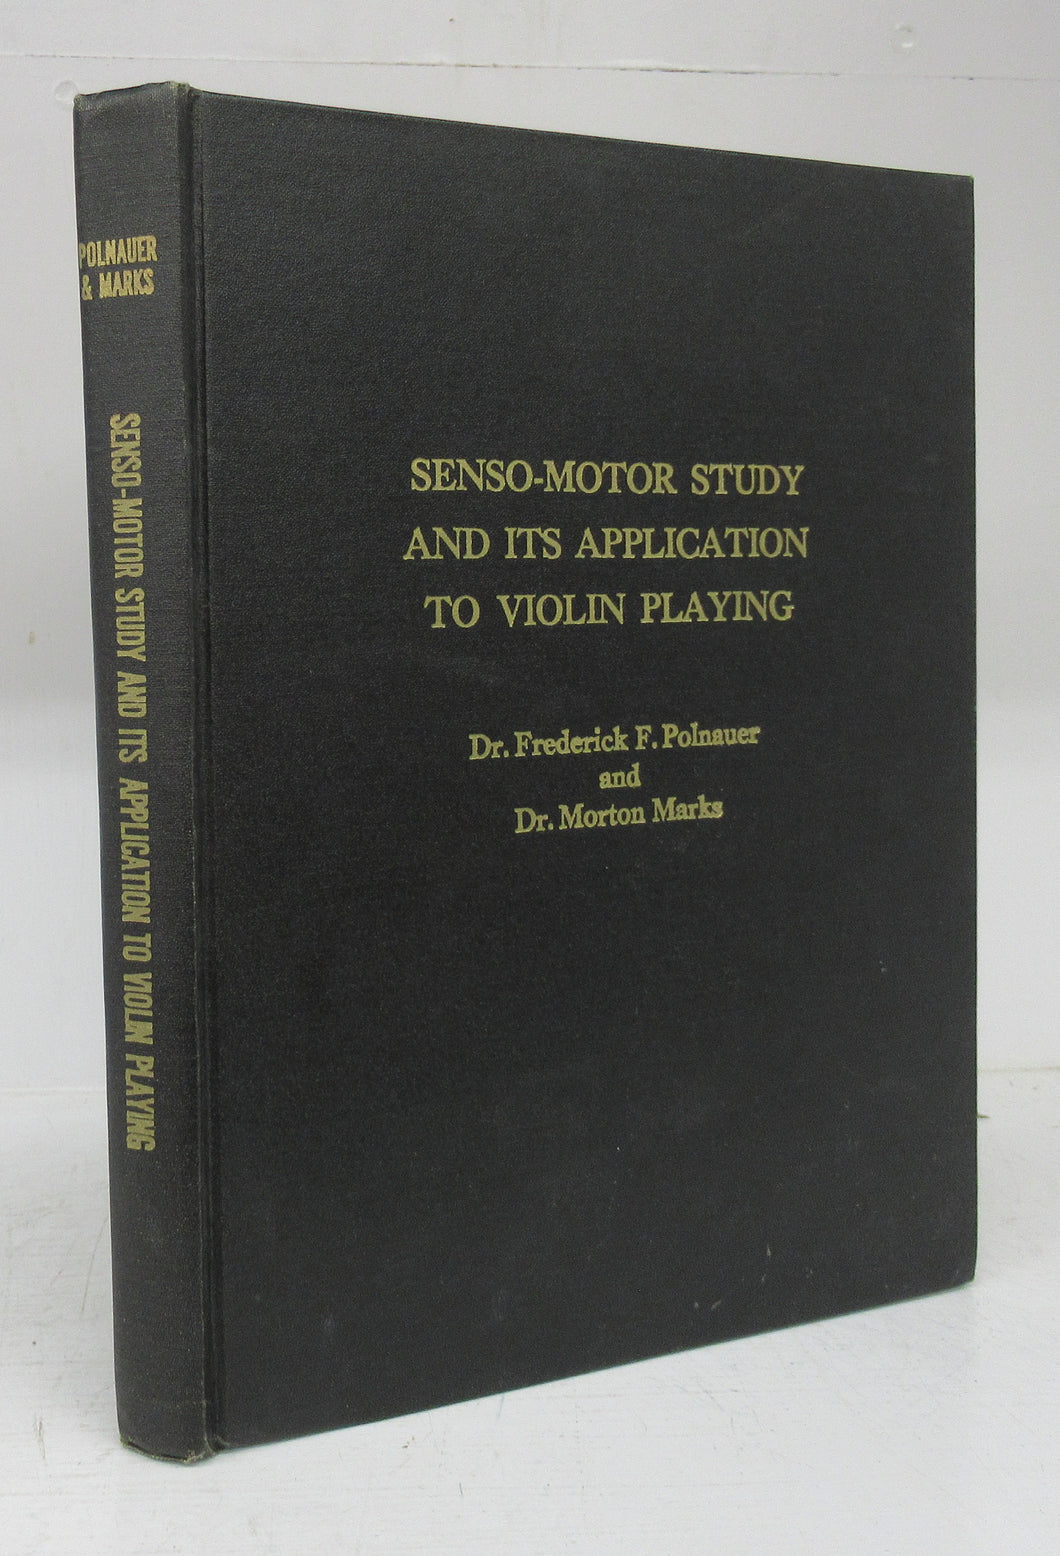 Senso-Motor Study and Its Application to Violin Playing